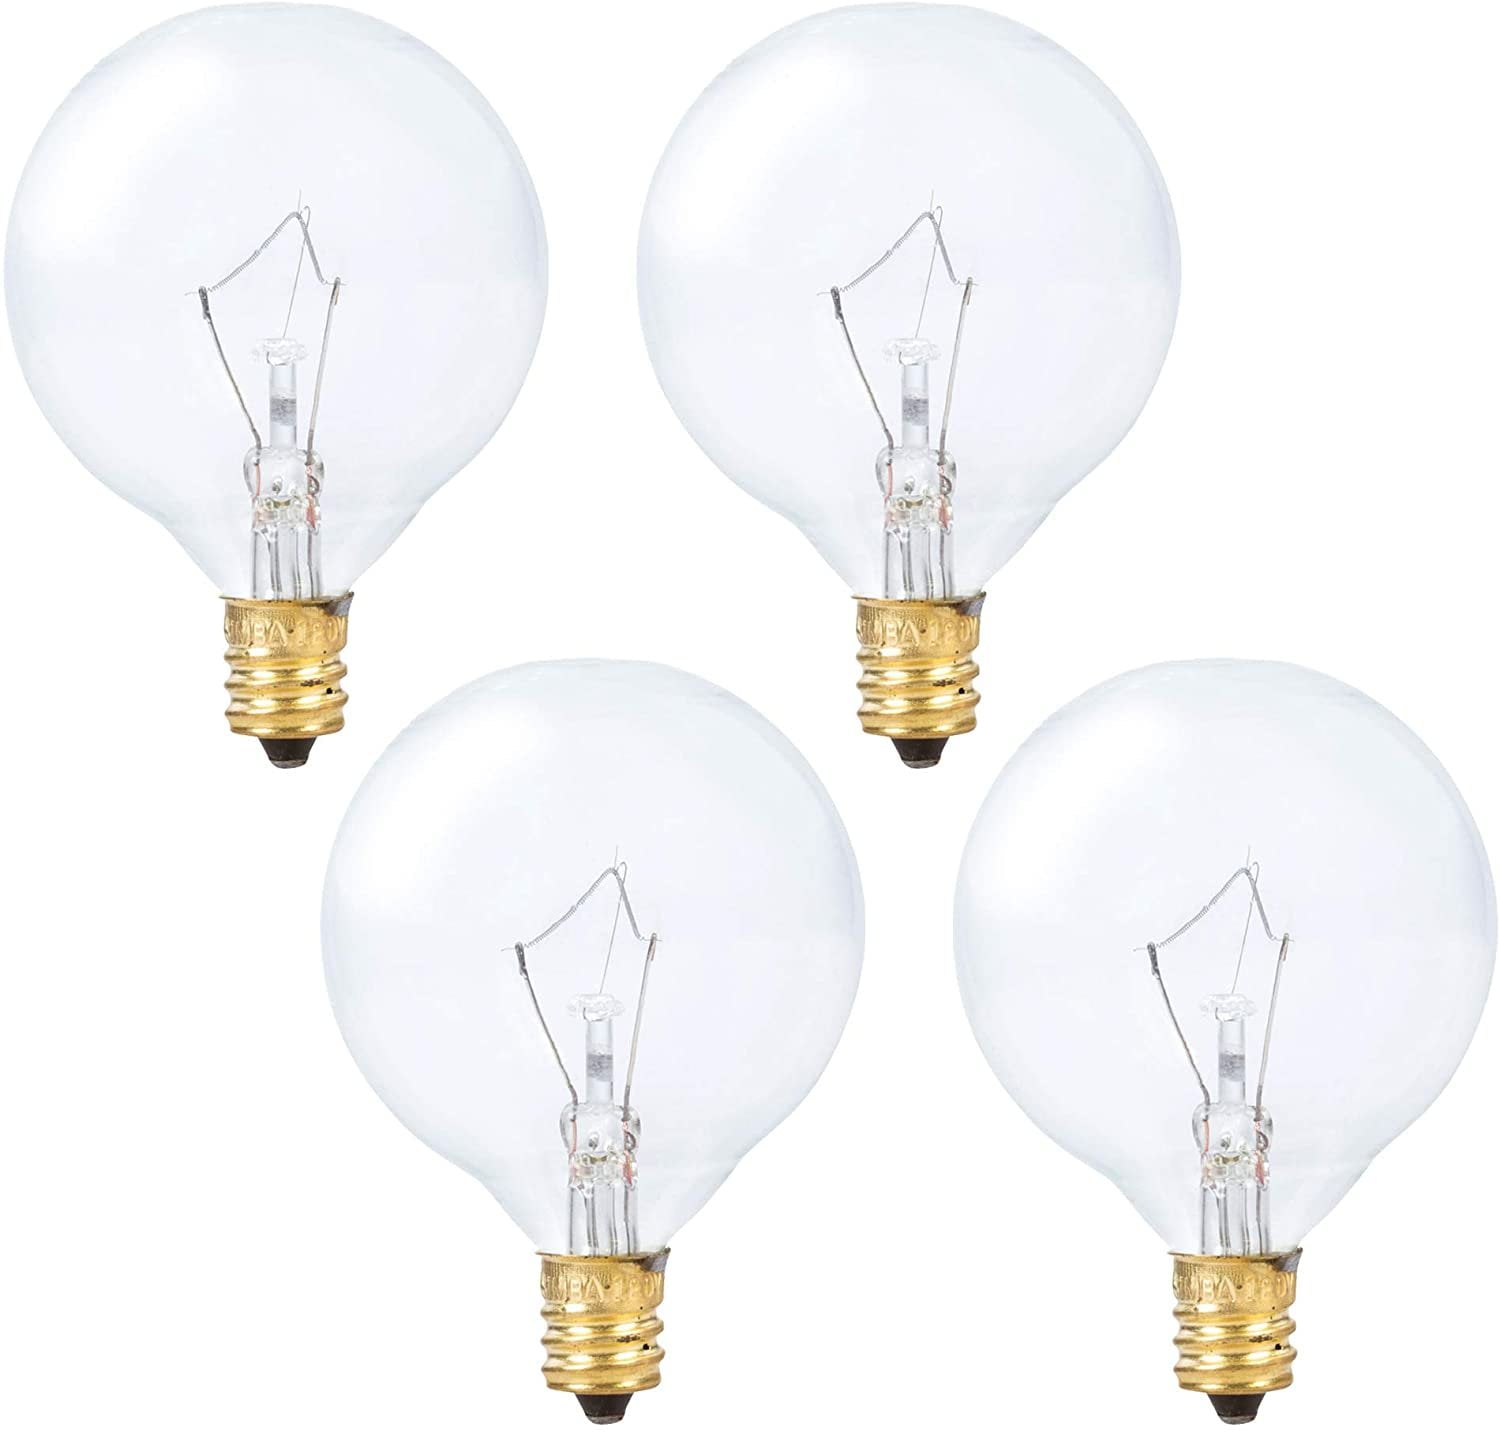 no logo 220V LED Energy Saving Bulb，Light Bulb Glass Decorative Bulb for Ceiling Fan and Pendant Lamp Vanity Room Living Room X5